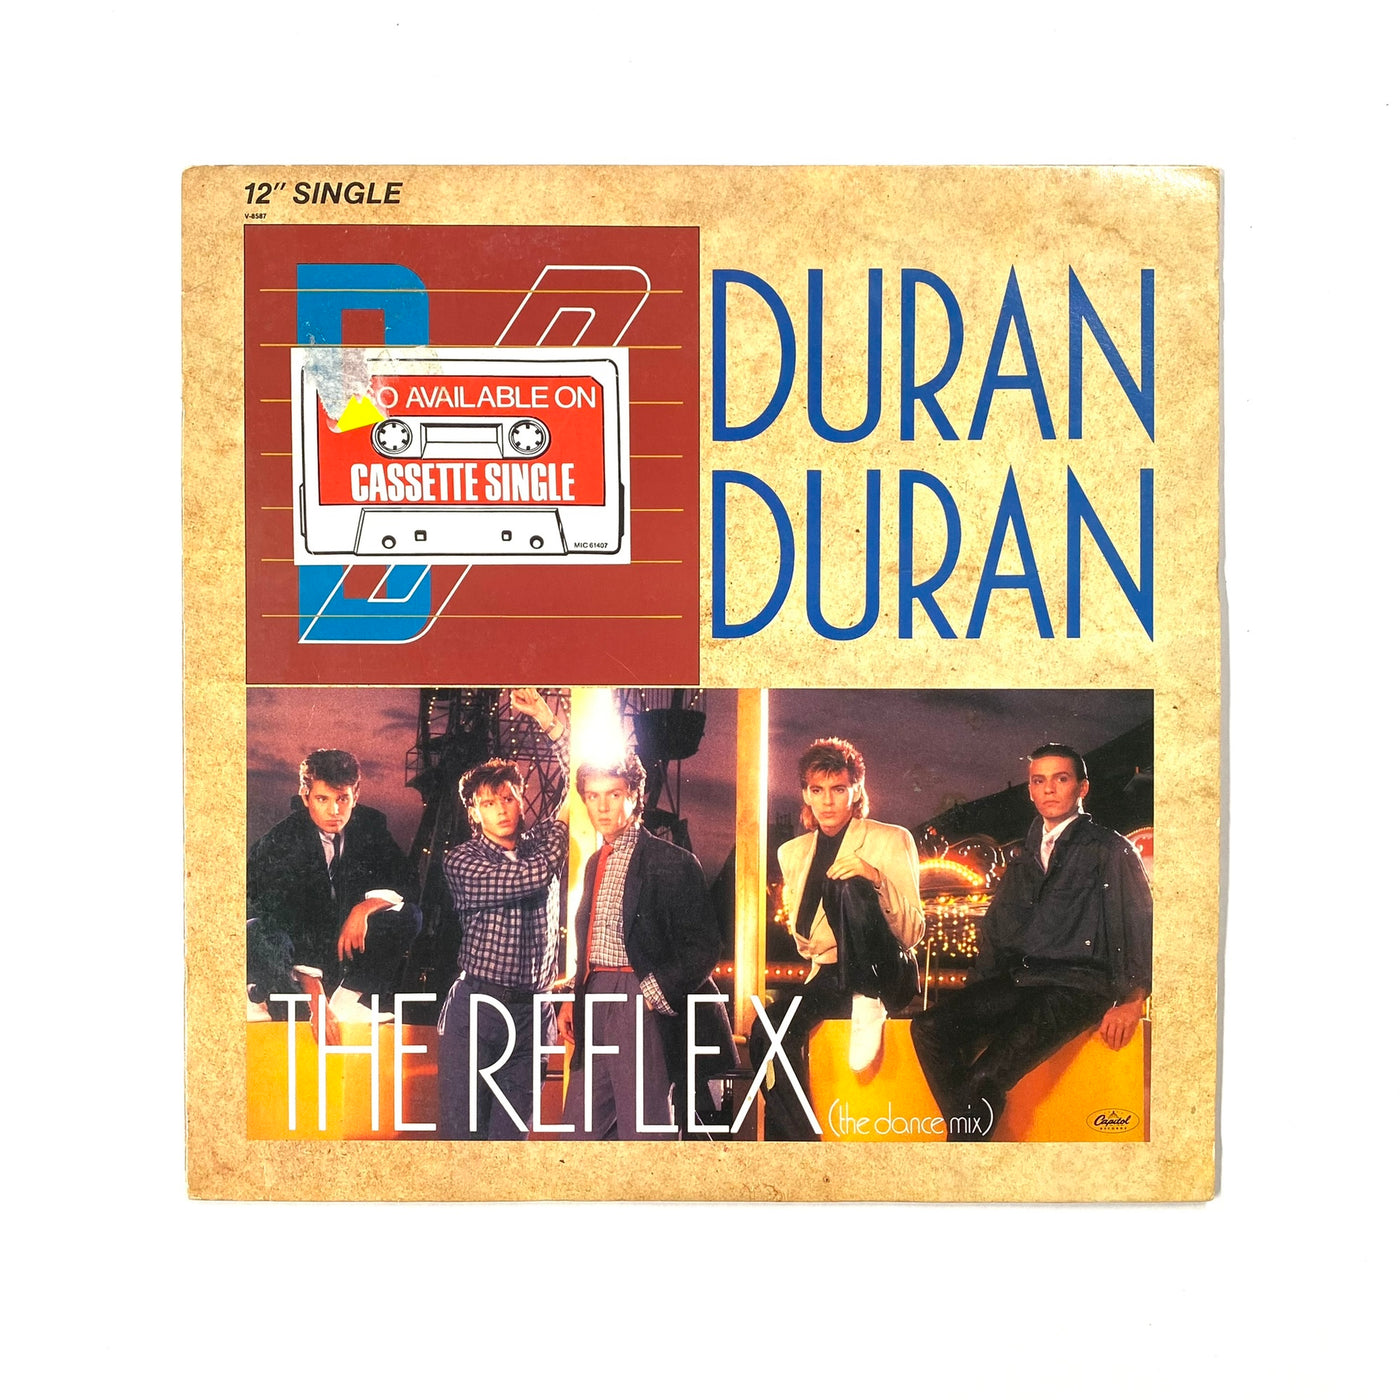 Duran Duran - The Reflex (The Dance Mix)